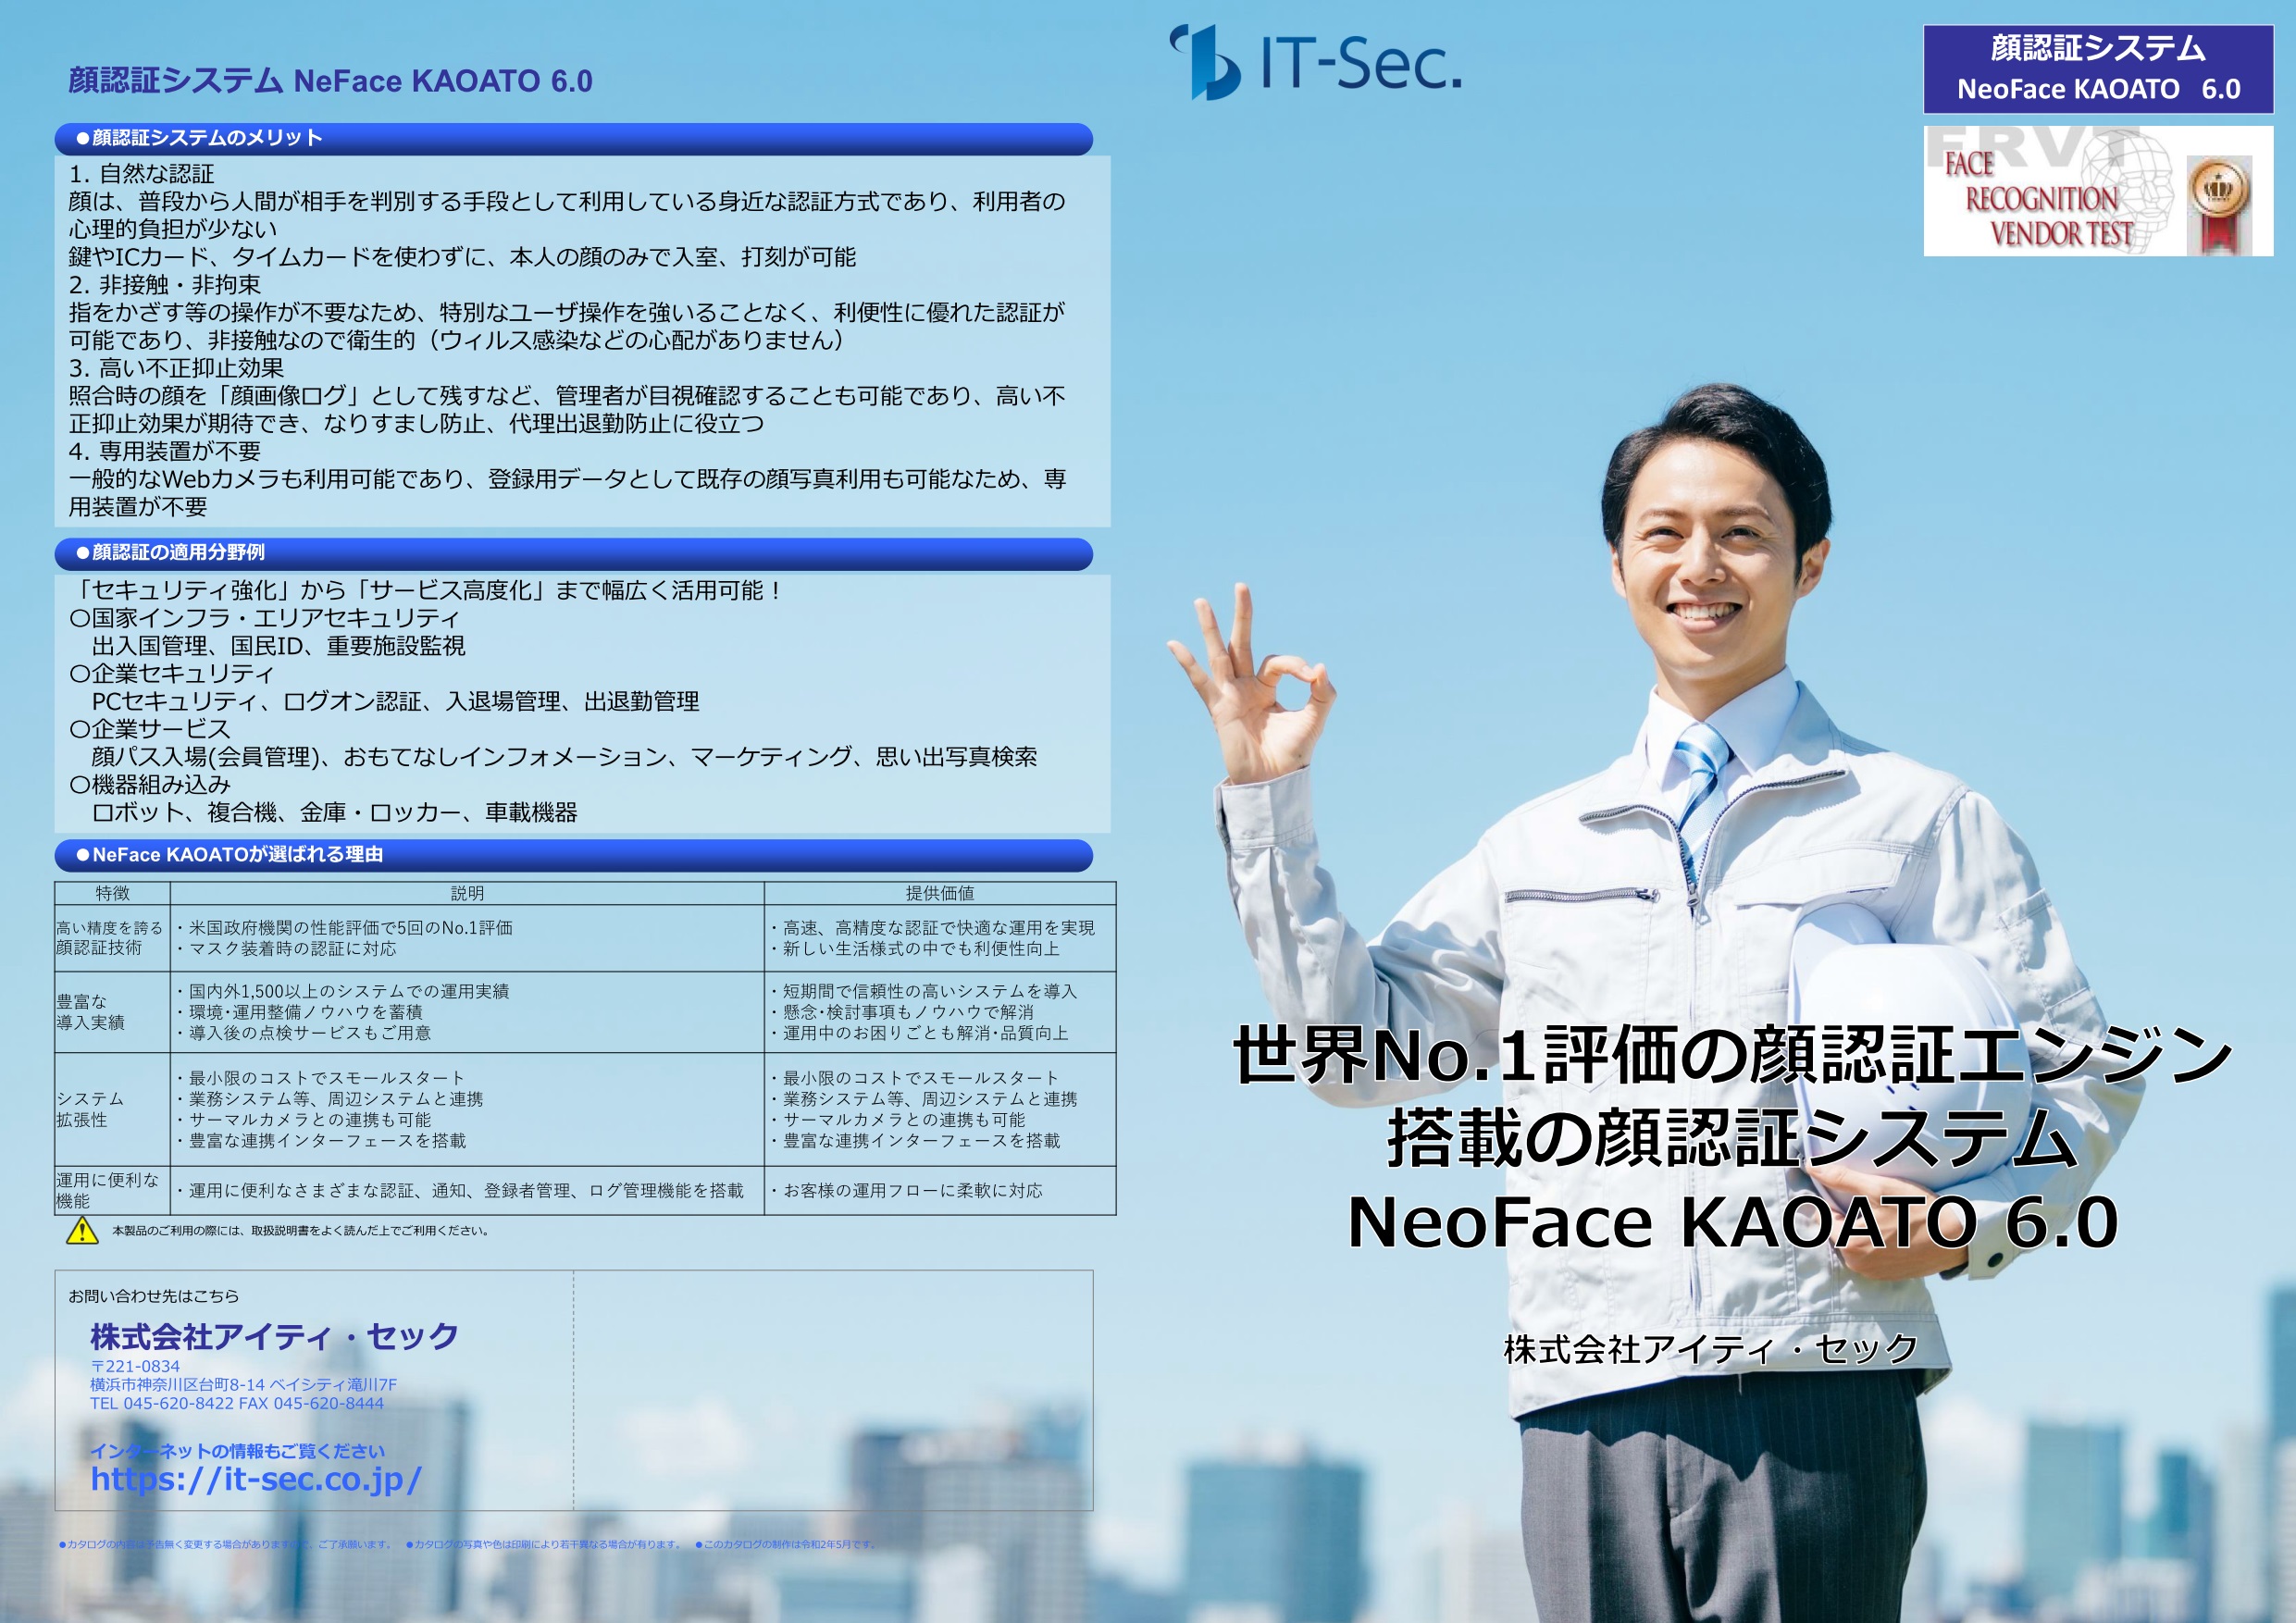 「NeoFace KAOATO 6.0」の最新機能をご紹介します